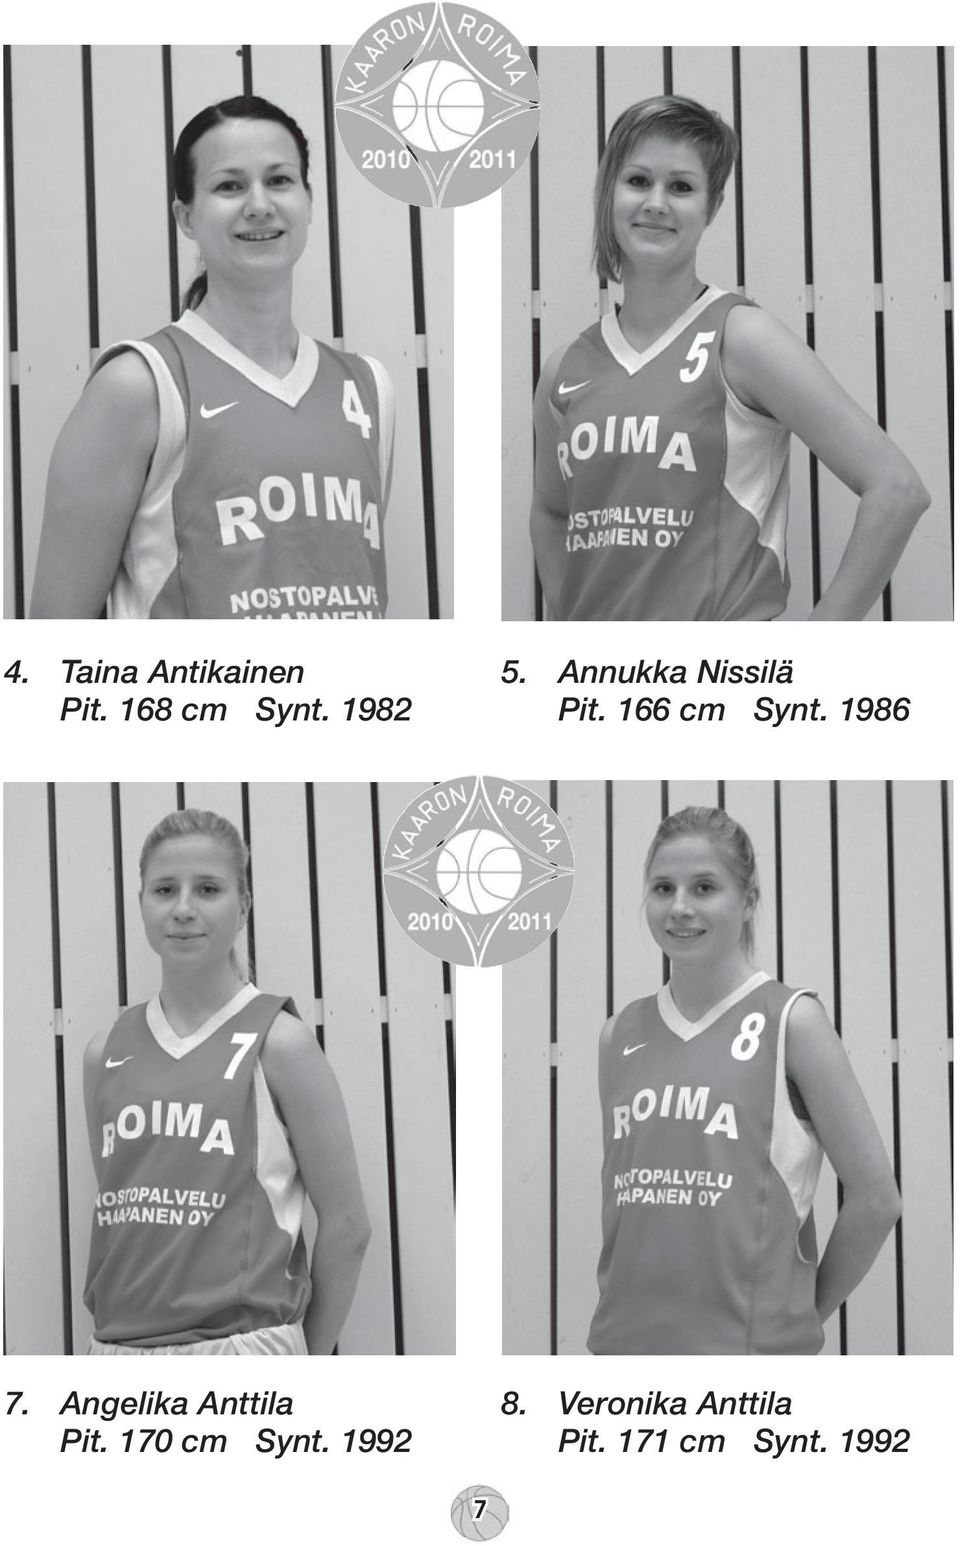 1986 7. Angelika Anttila Pit. 170 cm Synt.